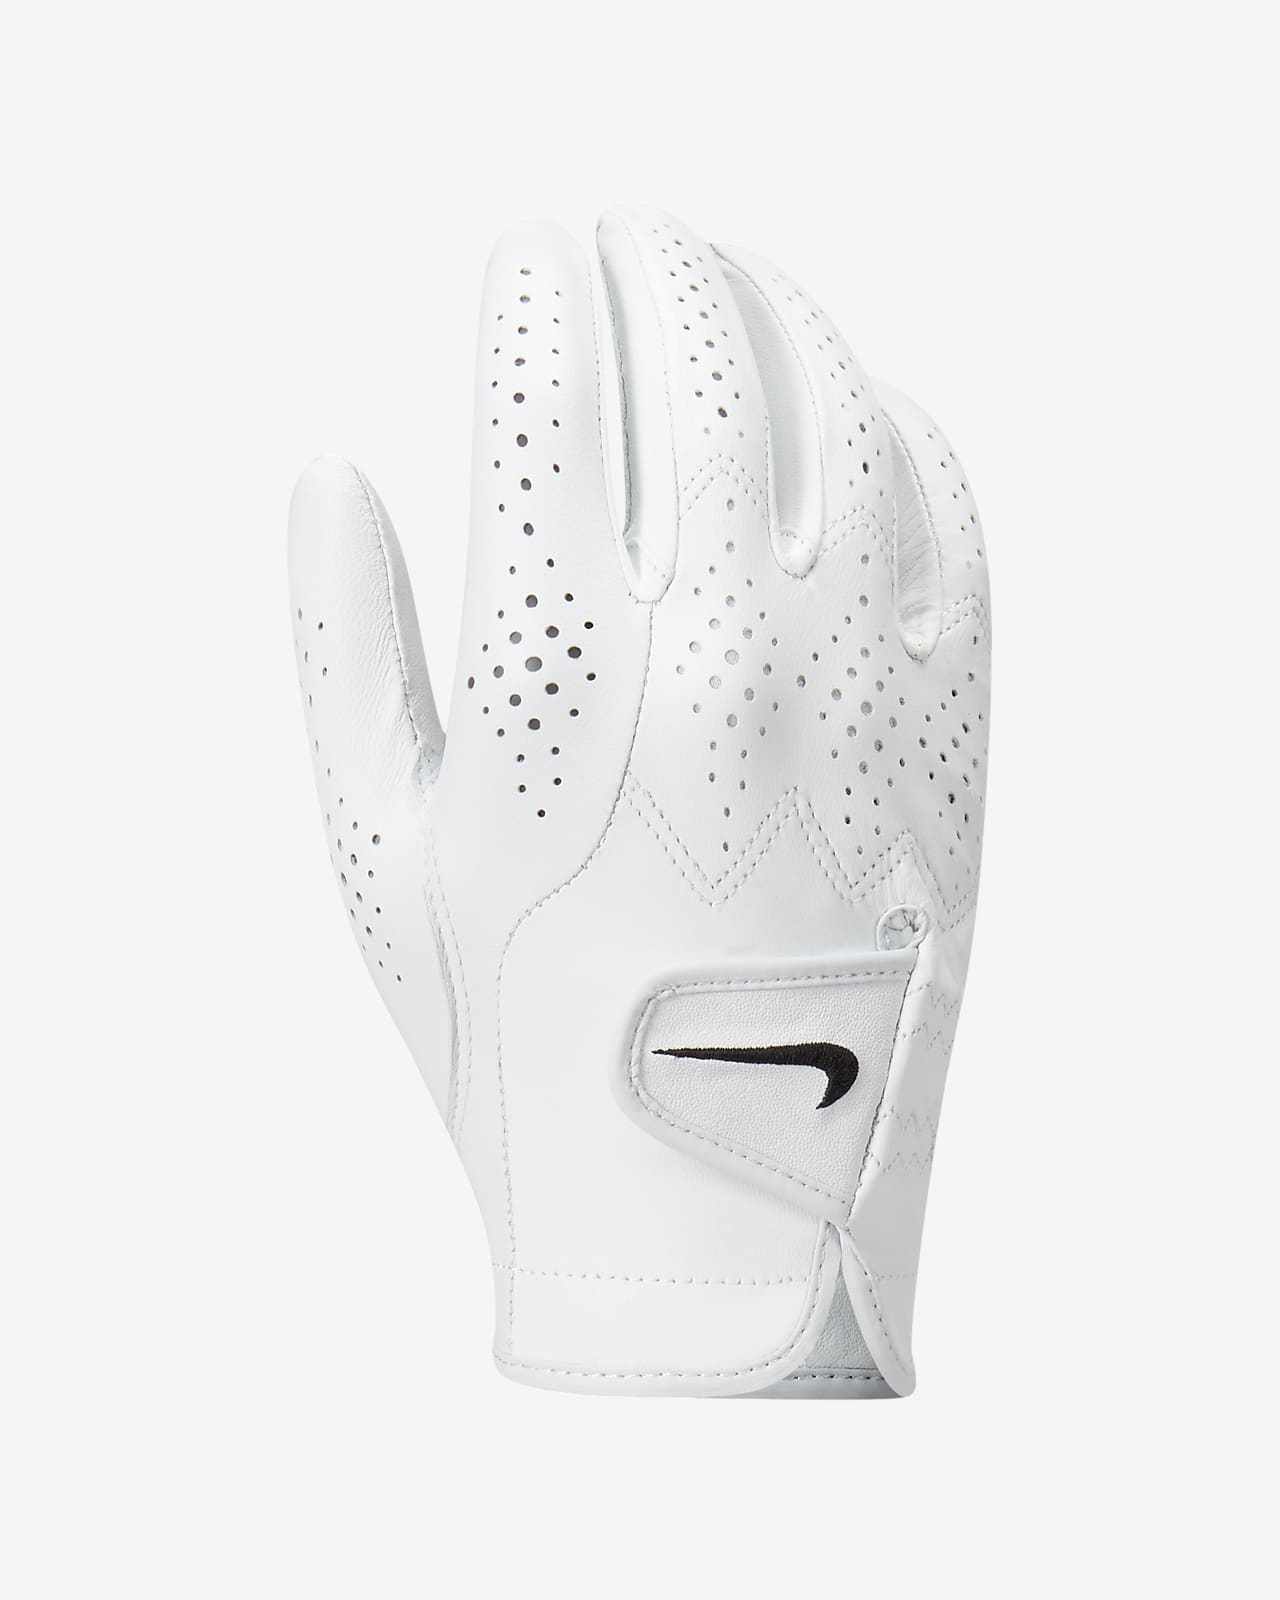 Nike Tour Classic 4 Women's Golf Glove (Right Hand)